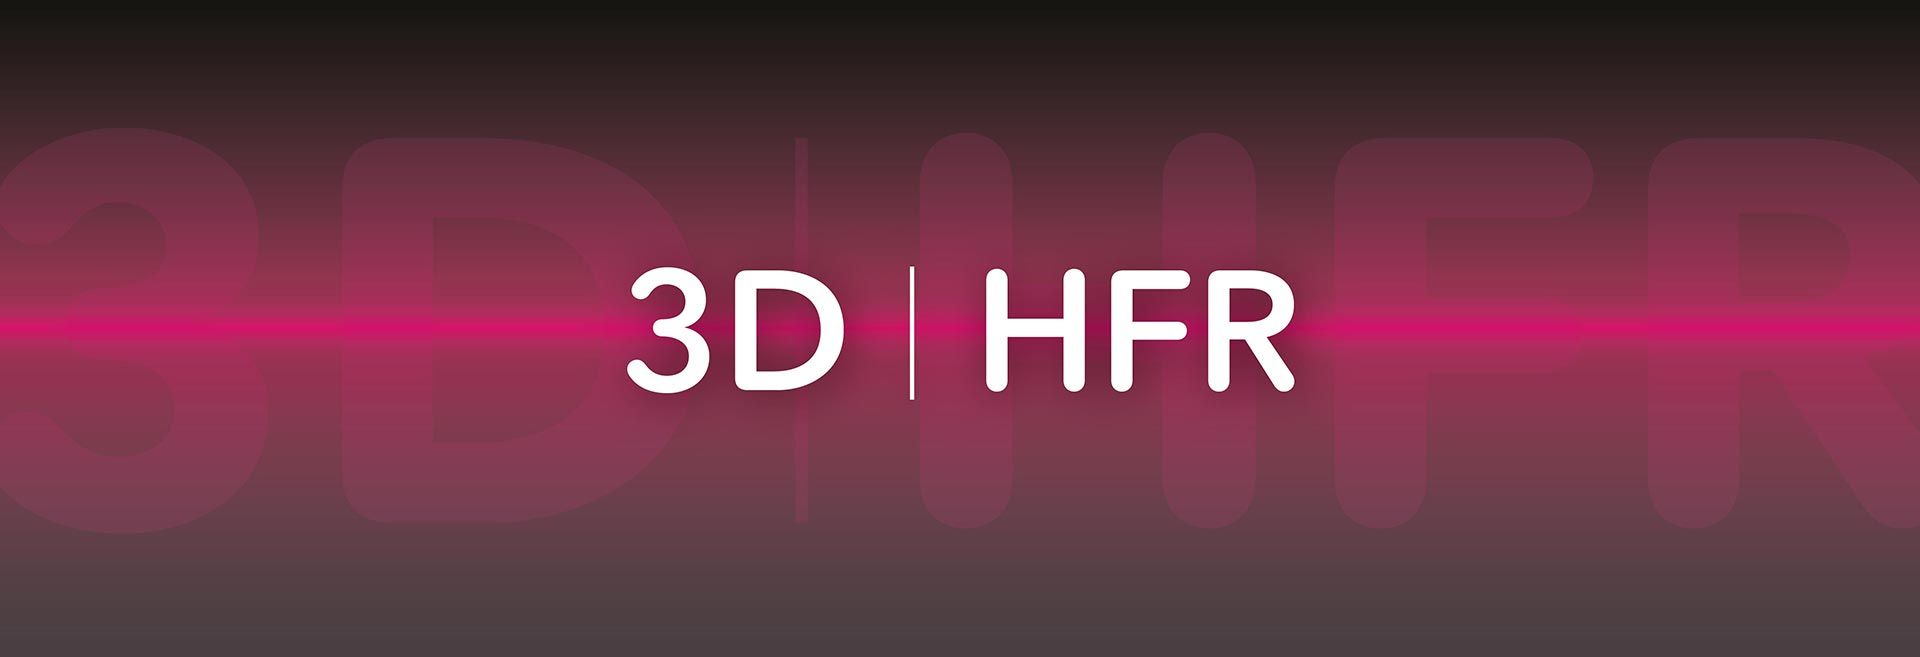 3D HFR